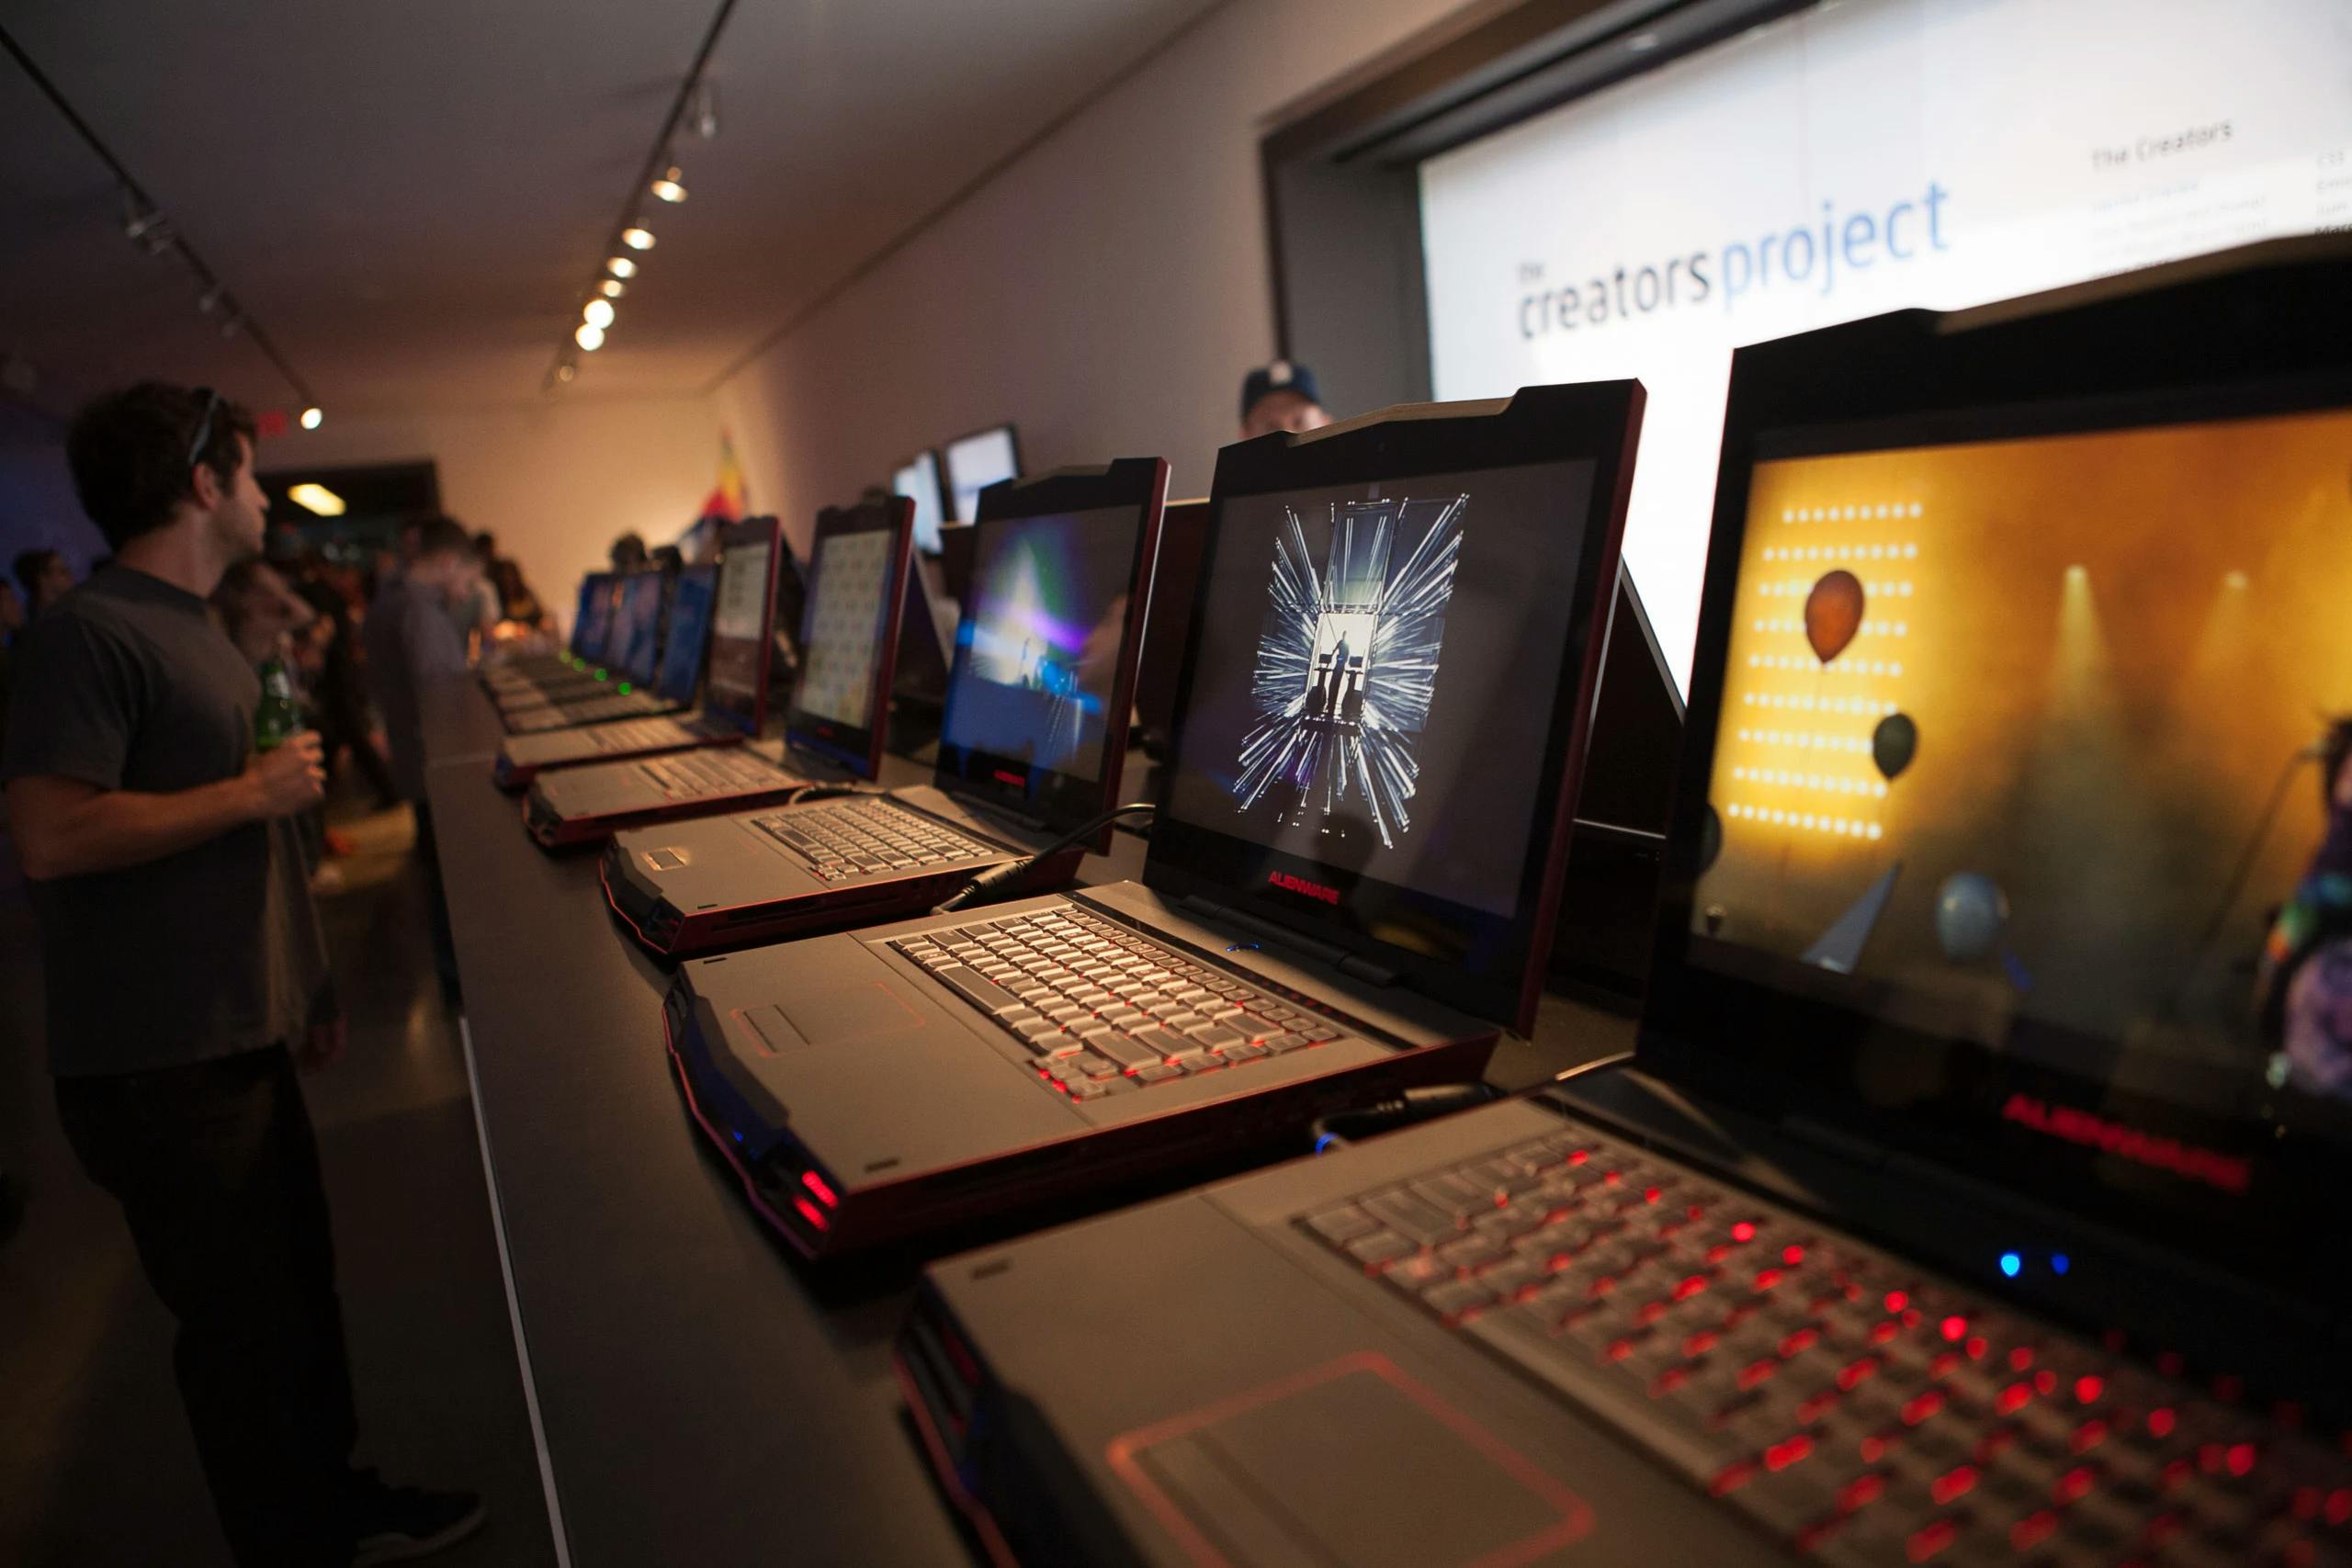 The Creators Project - Intel (sponsor) laptops display at Milk Studios